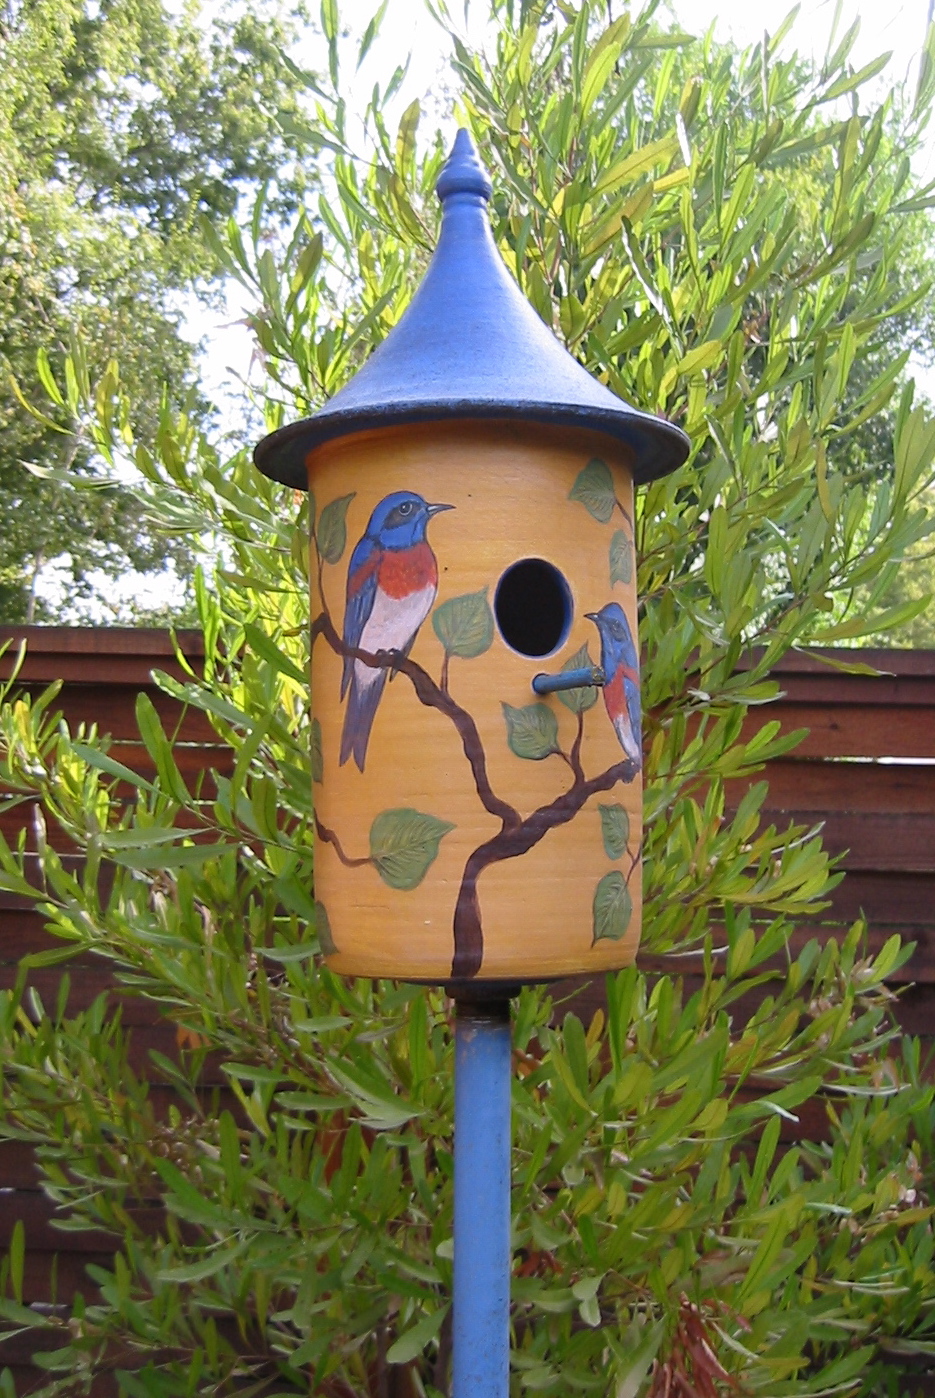 Colorful Ceramic Birdhouse with Bluebird Design